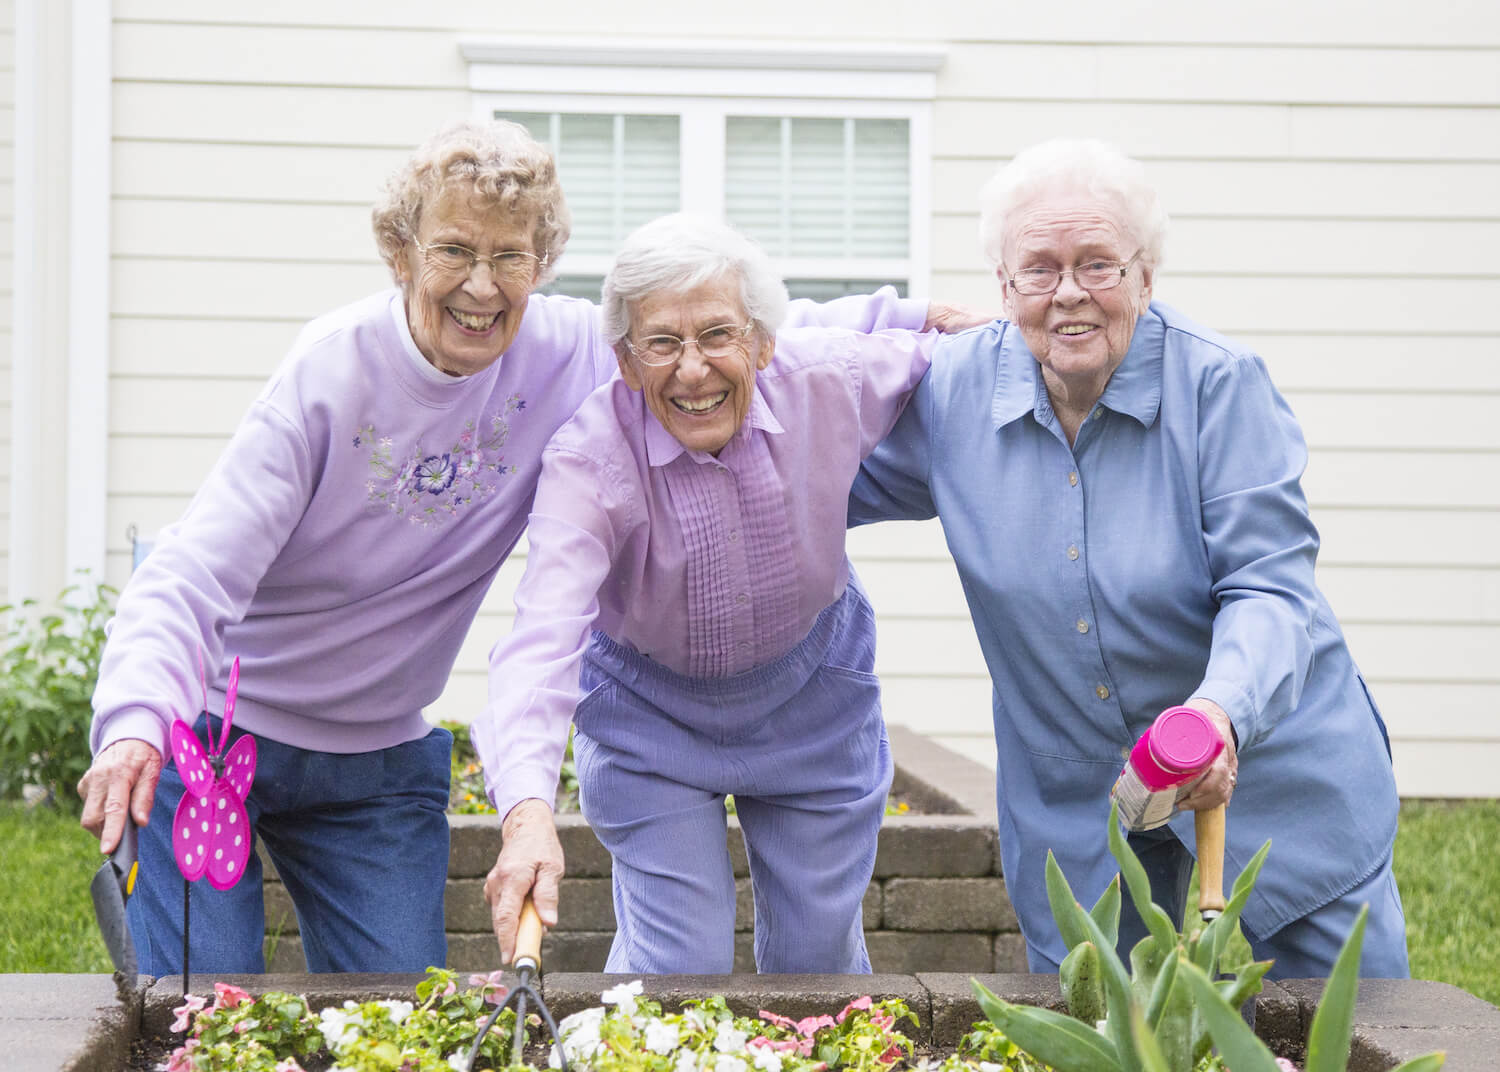 Senior residents enjoying gardening together